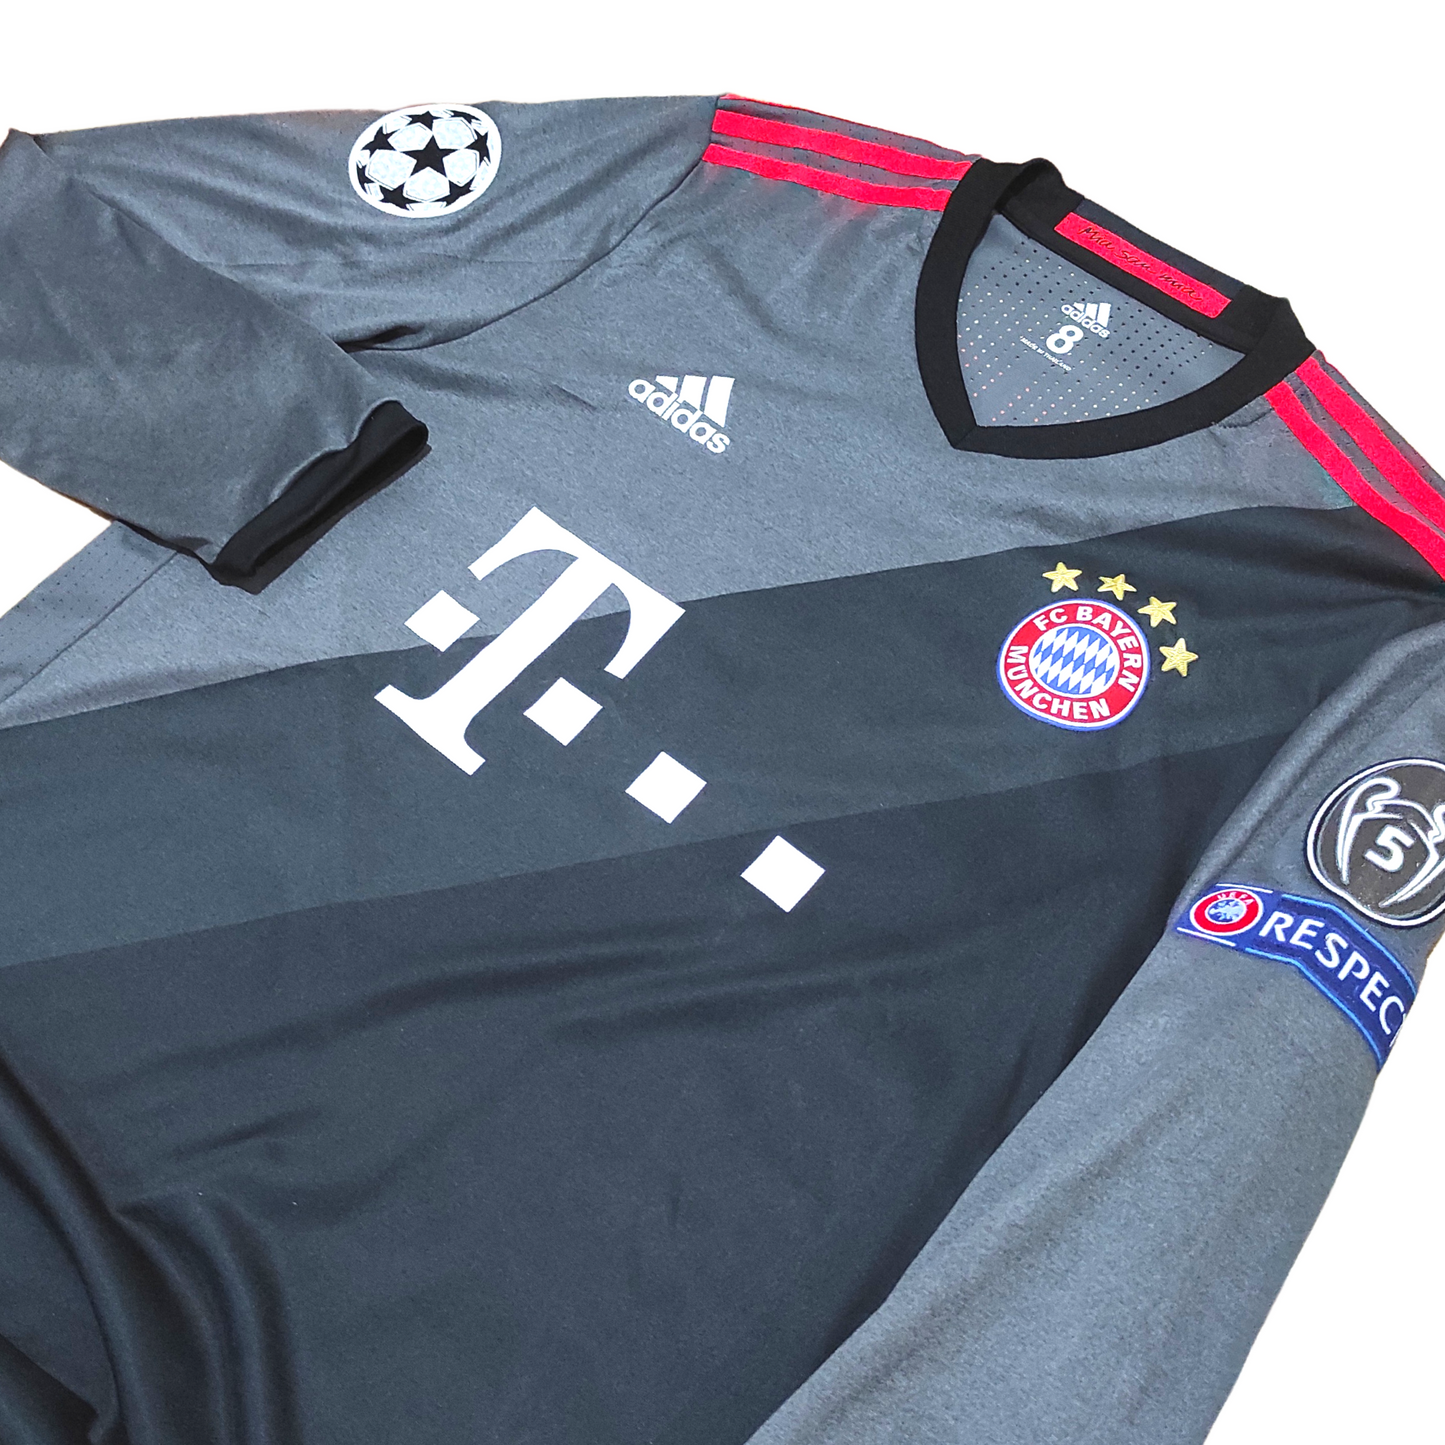 Bayern Munich Away Player Issue L/S Shirt 2016-2017 Lewandowski (8)